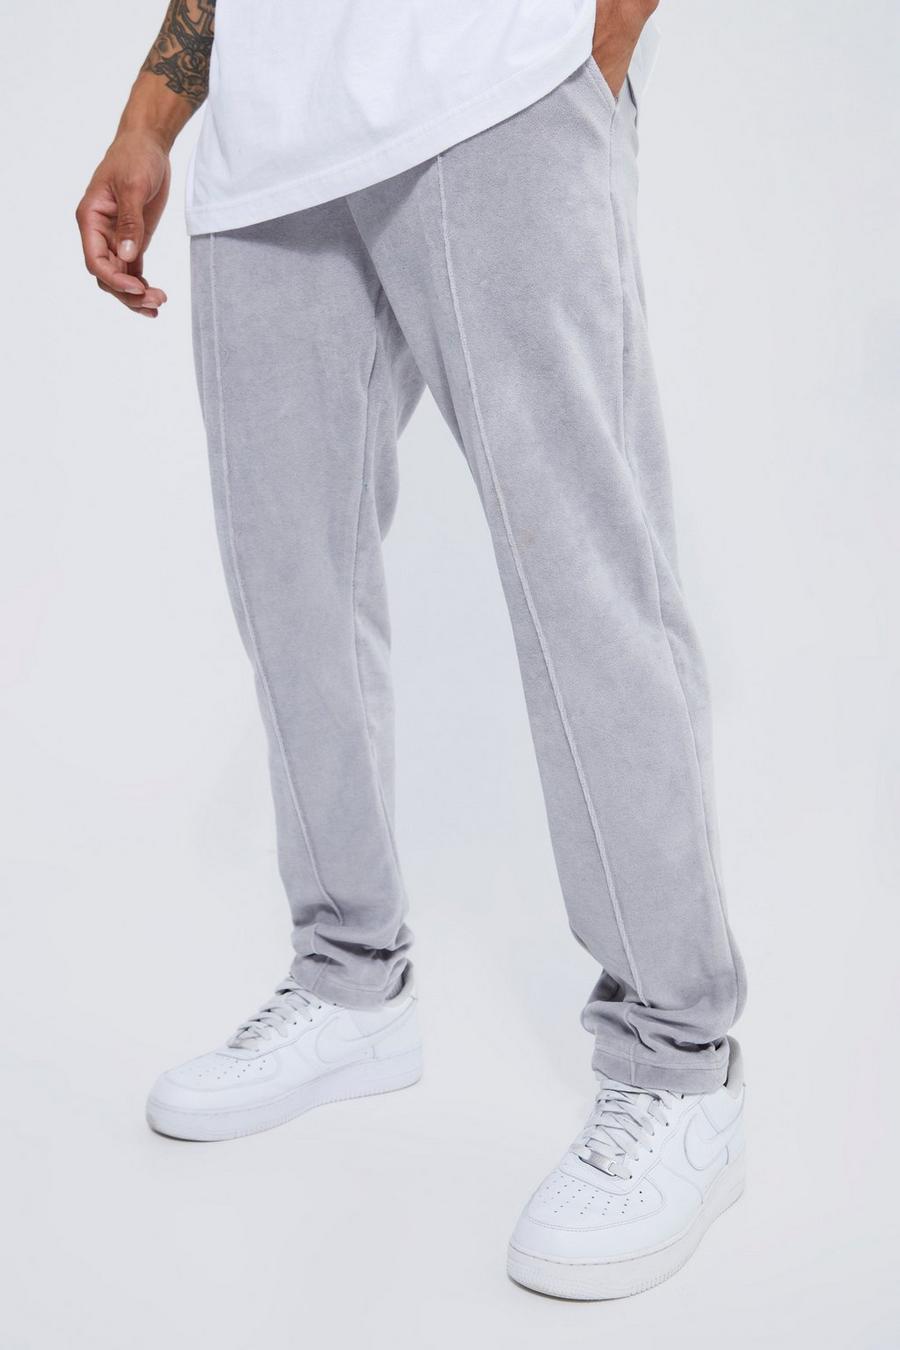 Pantaloni tuta Skinny Fit in velours con nervature, Grey grigio